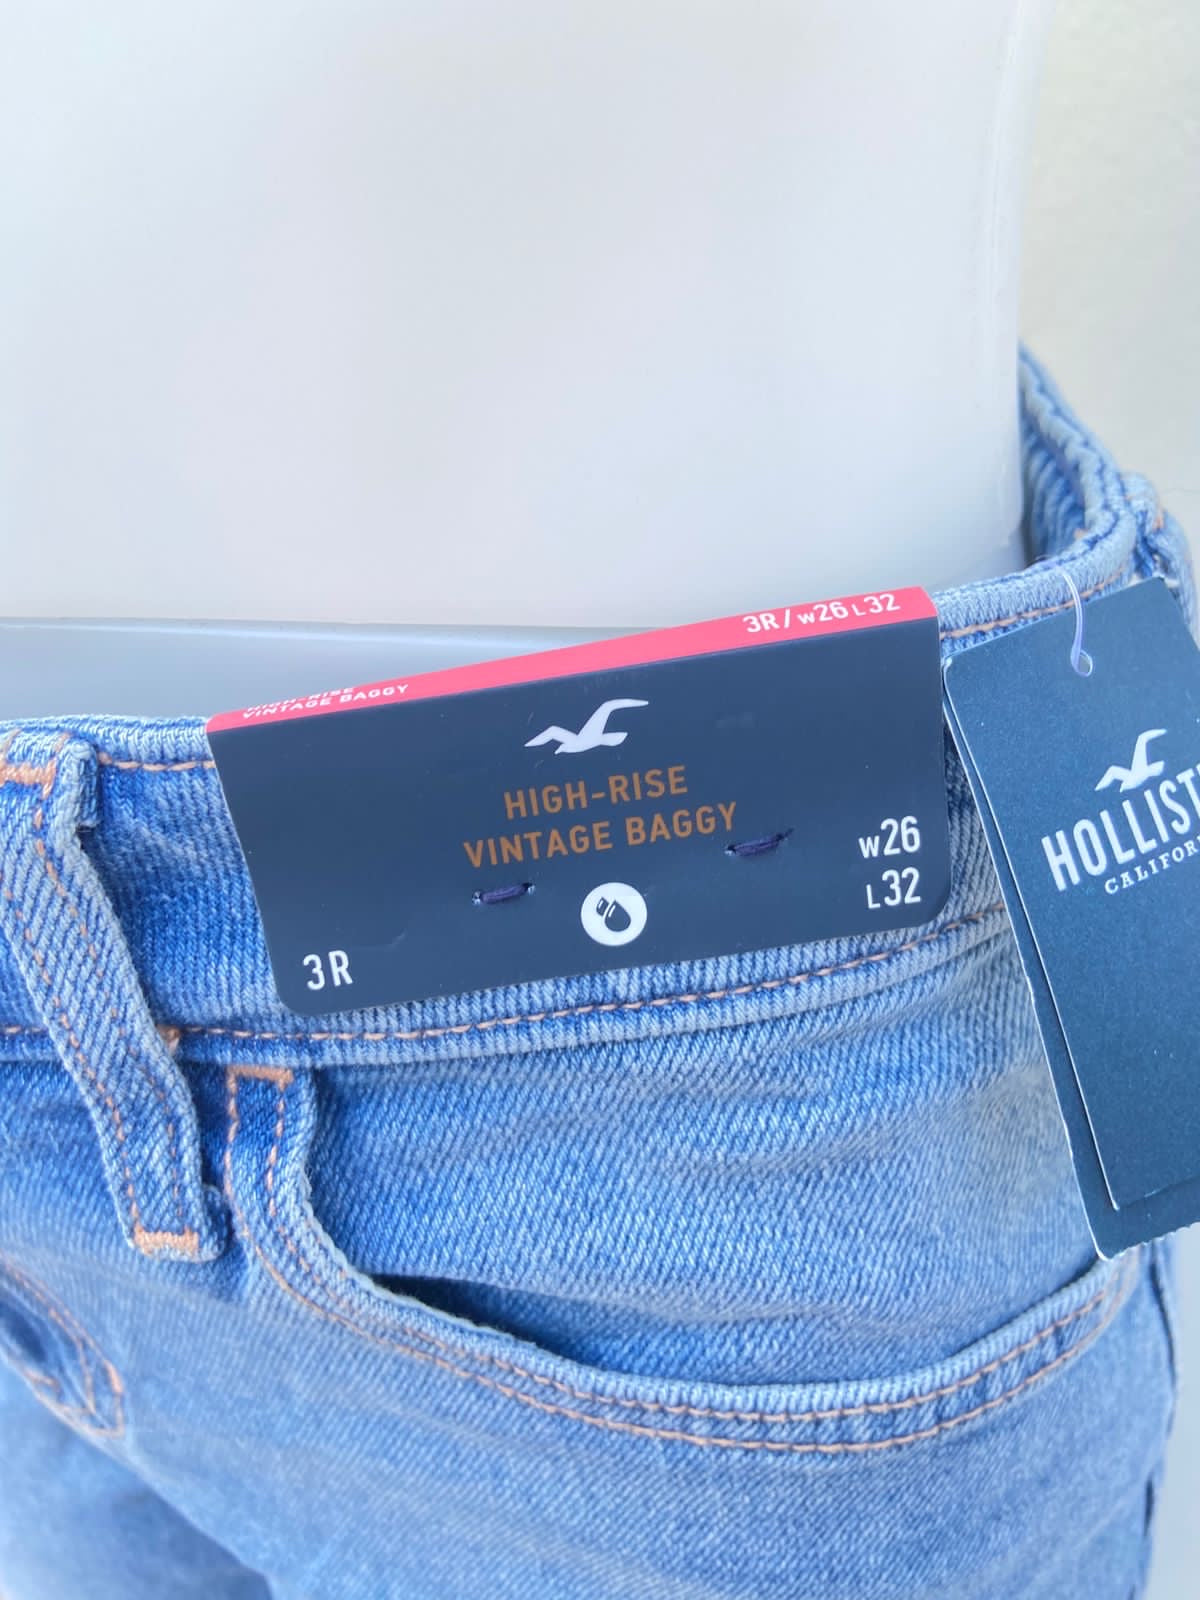 Pantalon jeans Hollister original azul claro con rasgados al frente y –  Qlindo Store